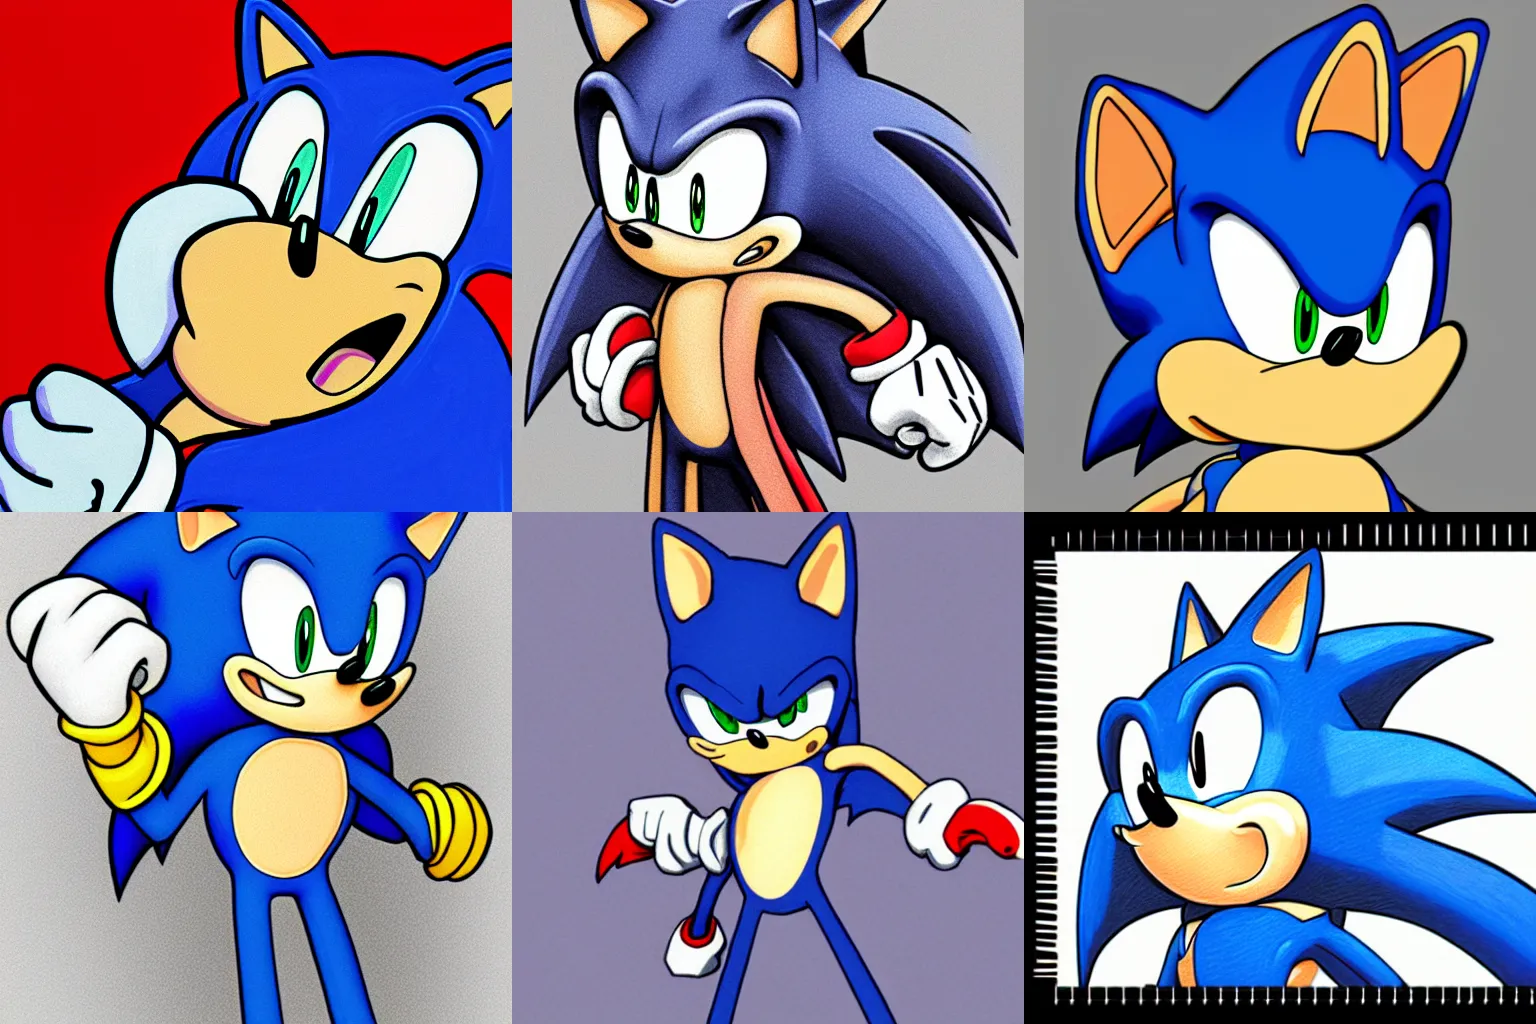 Prompt: Sonic the Hedgehog, sketch